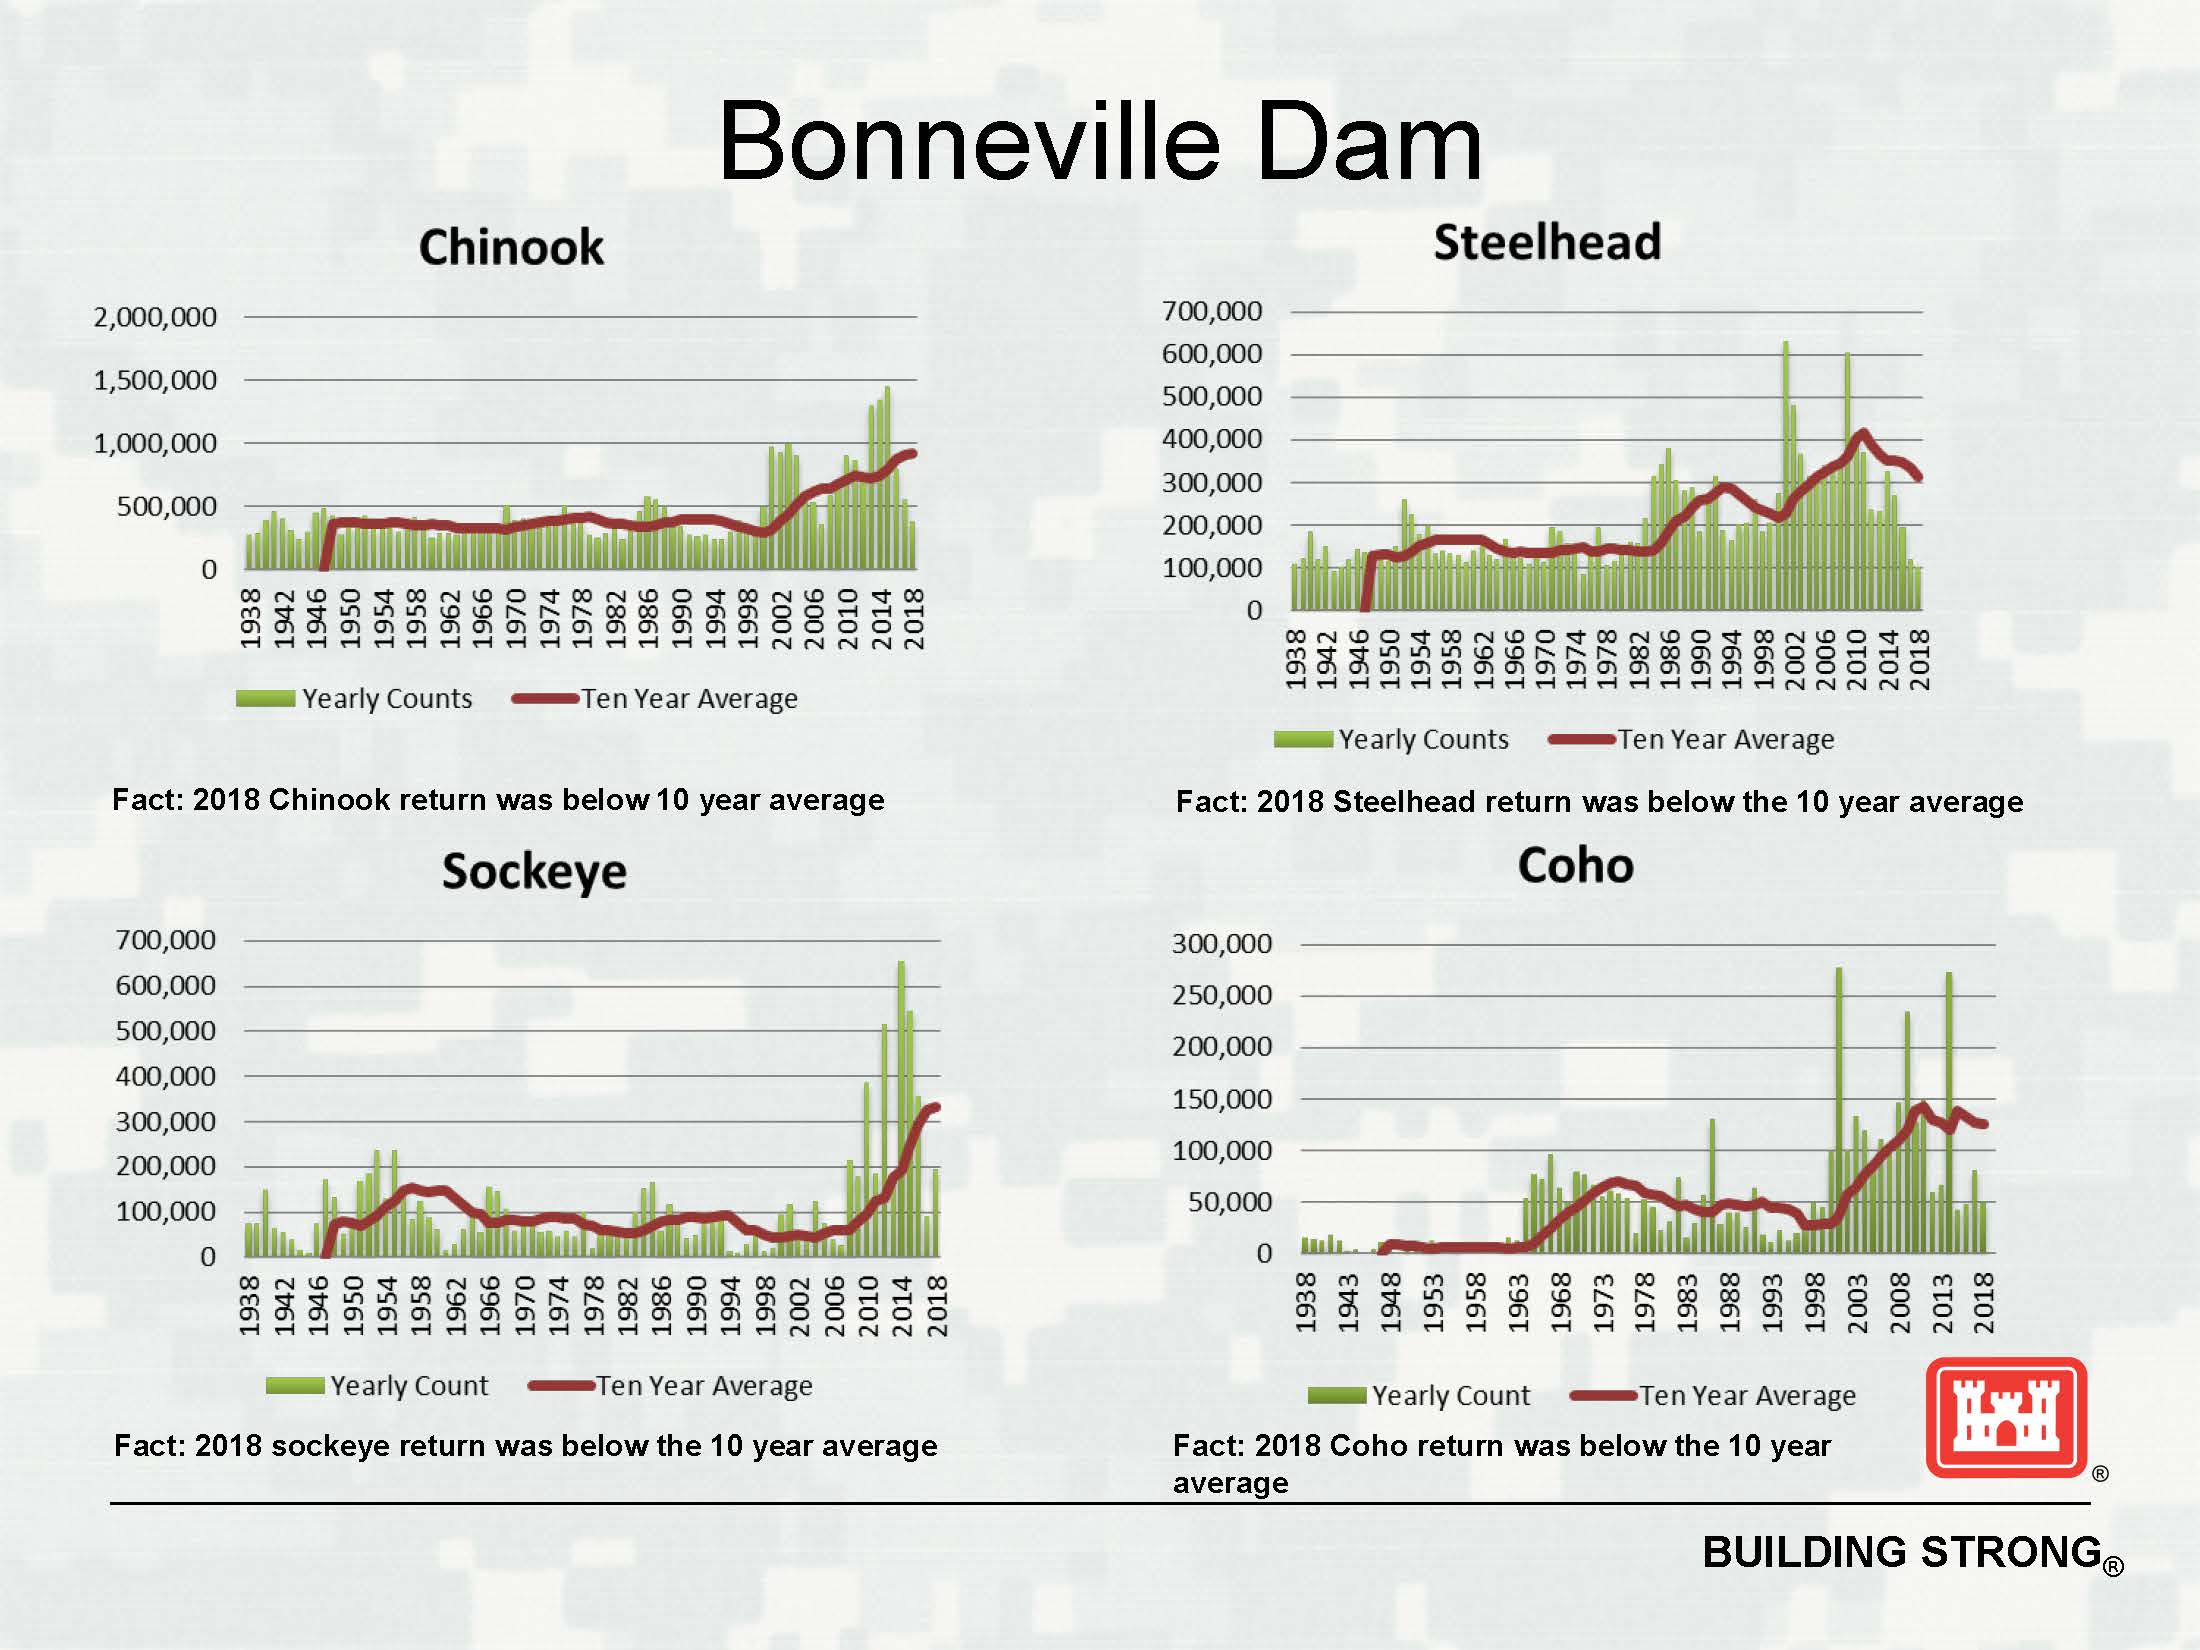 Bonneville Dam Adult Fish Returns. Four graphs showing Chinook, Steelhead, Sockeye, and Coho salmon respectively.